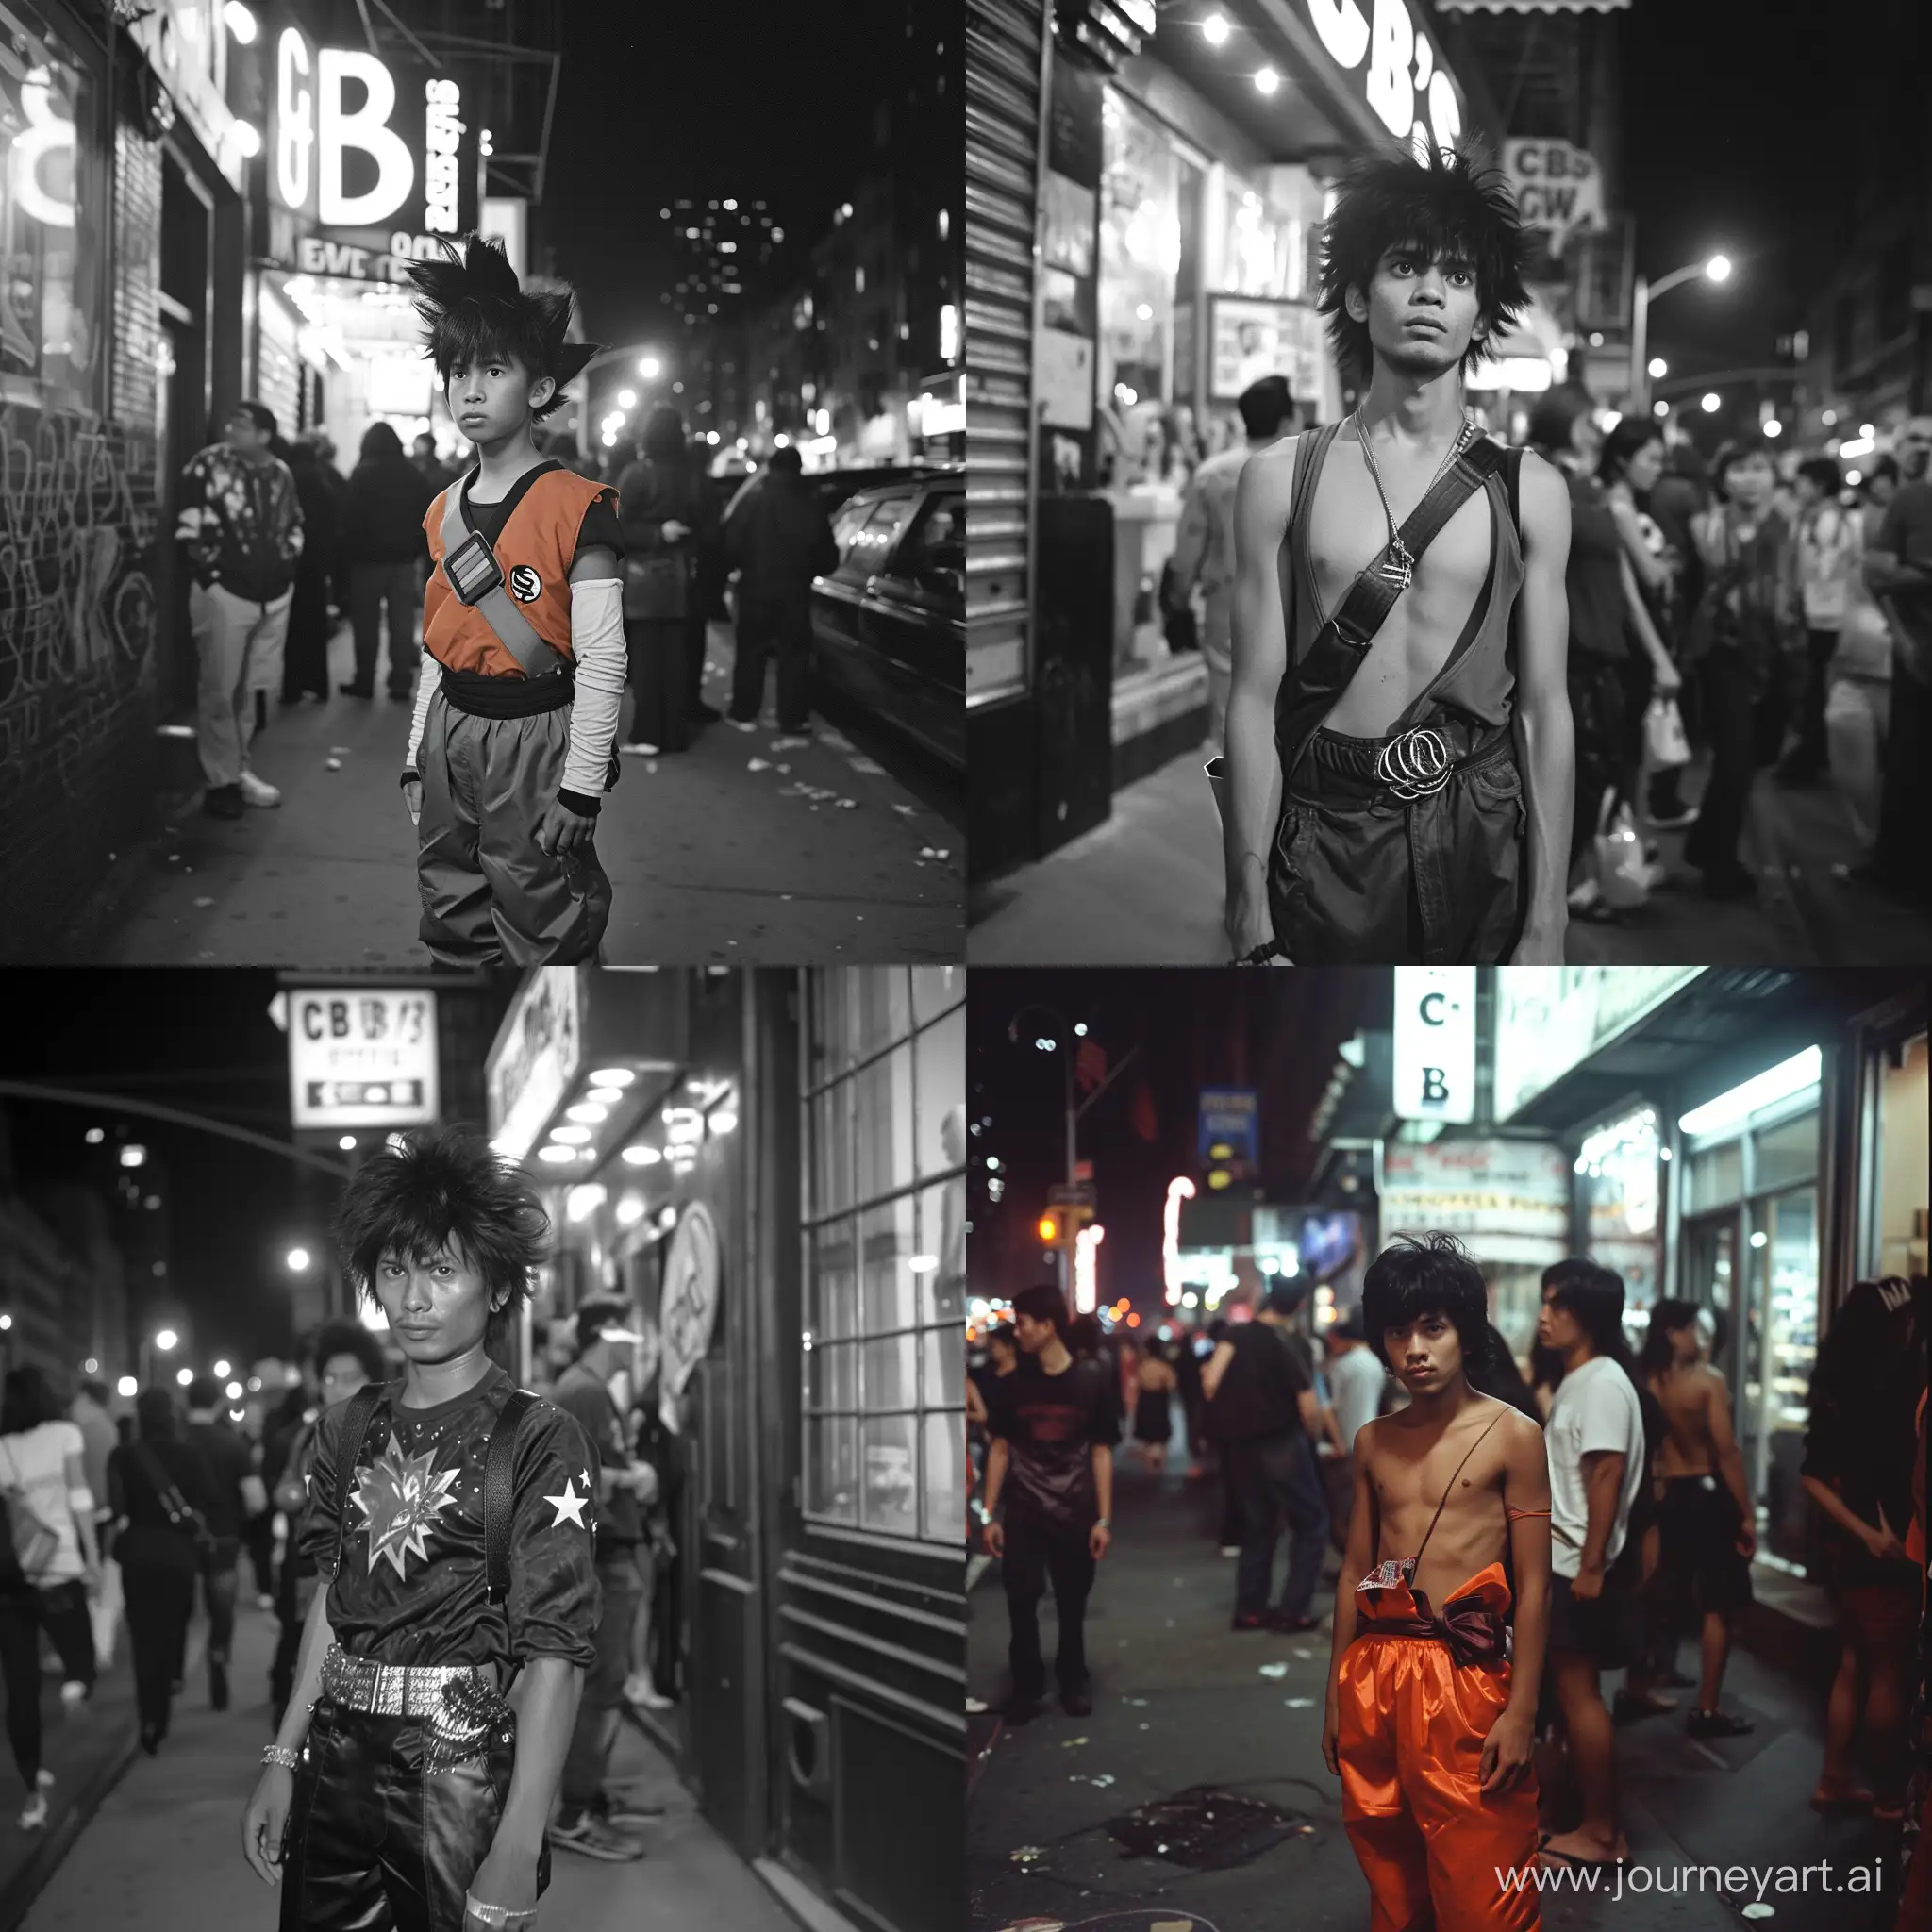 Indonesian-Goku-Cosplayer-Captured-in-1980s-Nighttime-New-York-Street-Scene